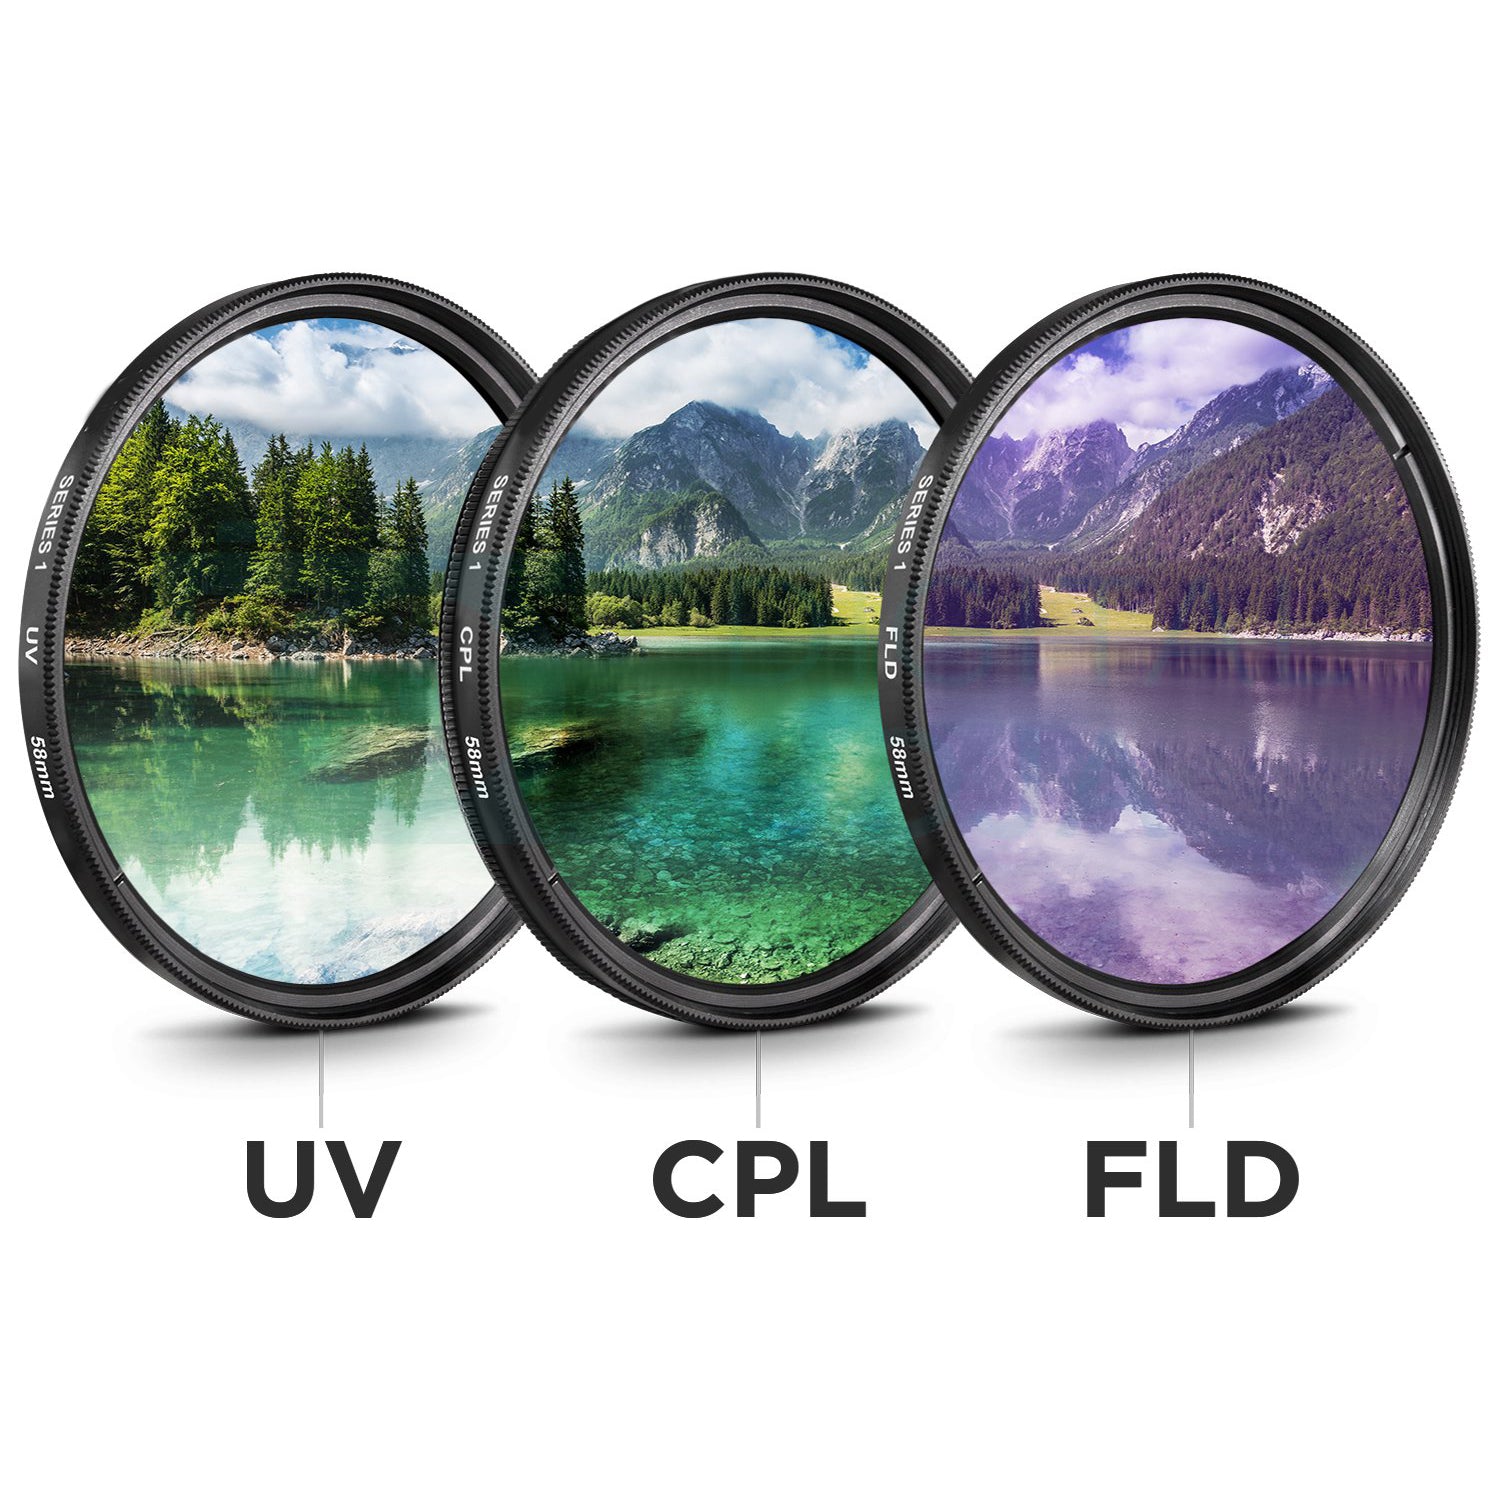 Canon EF 40mm f/2.8 STM Lens (6310B002) Lens with Bundle includes 3pc Filter Kit  + Lens Pouch + More